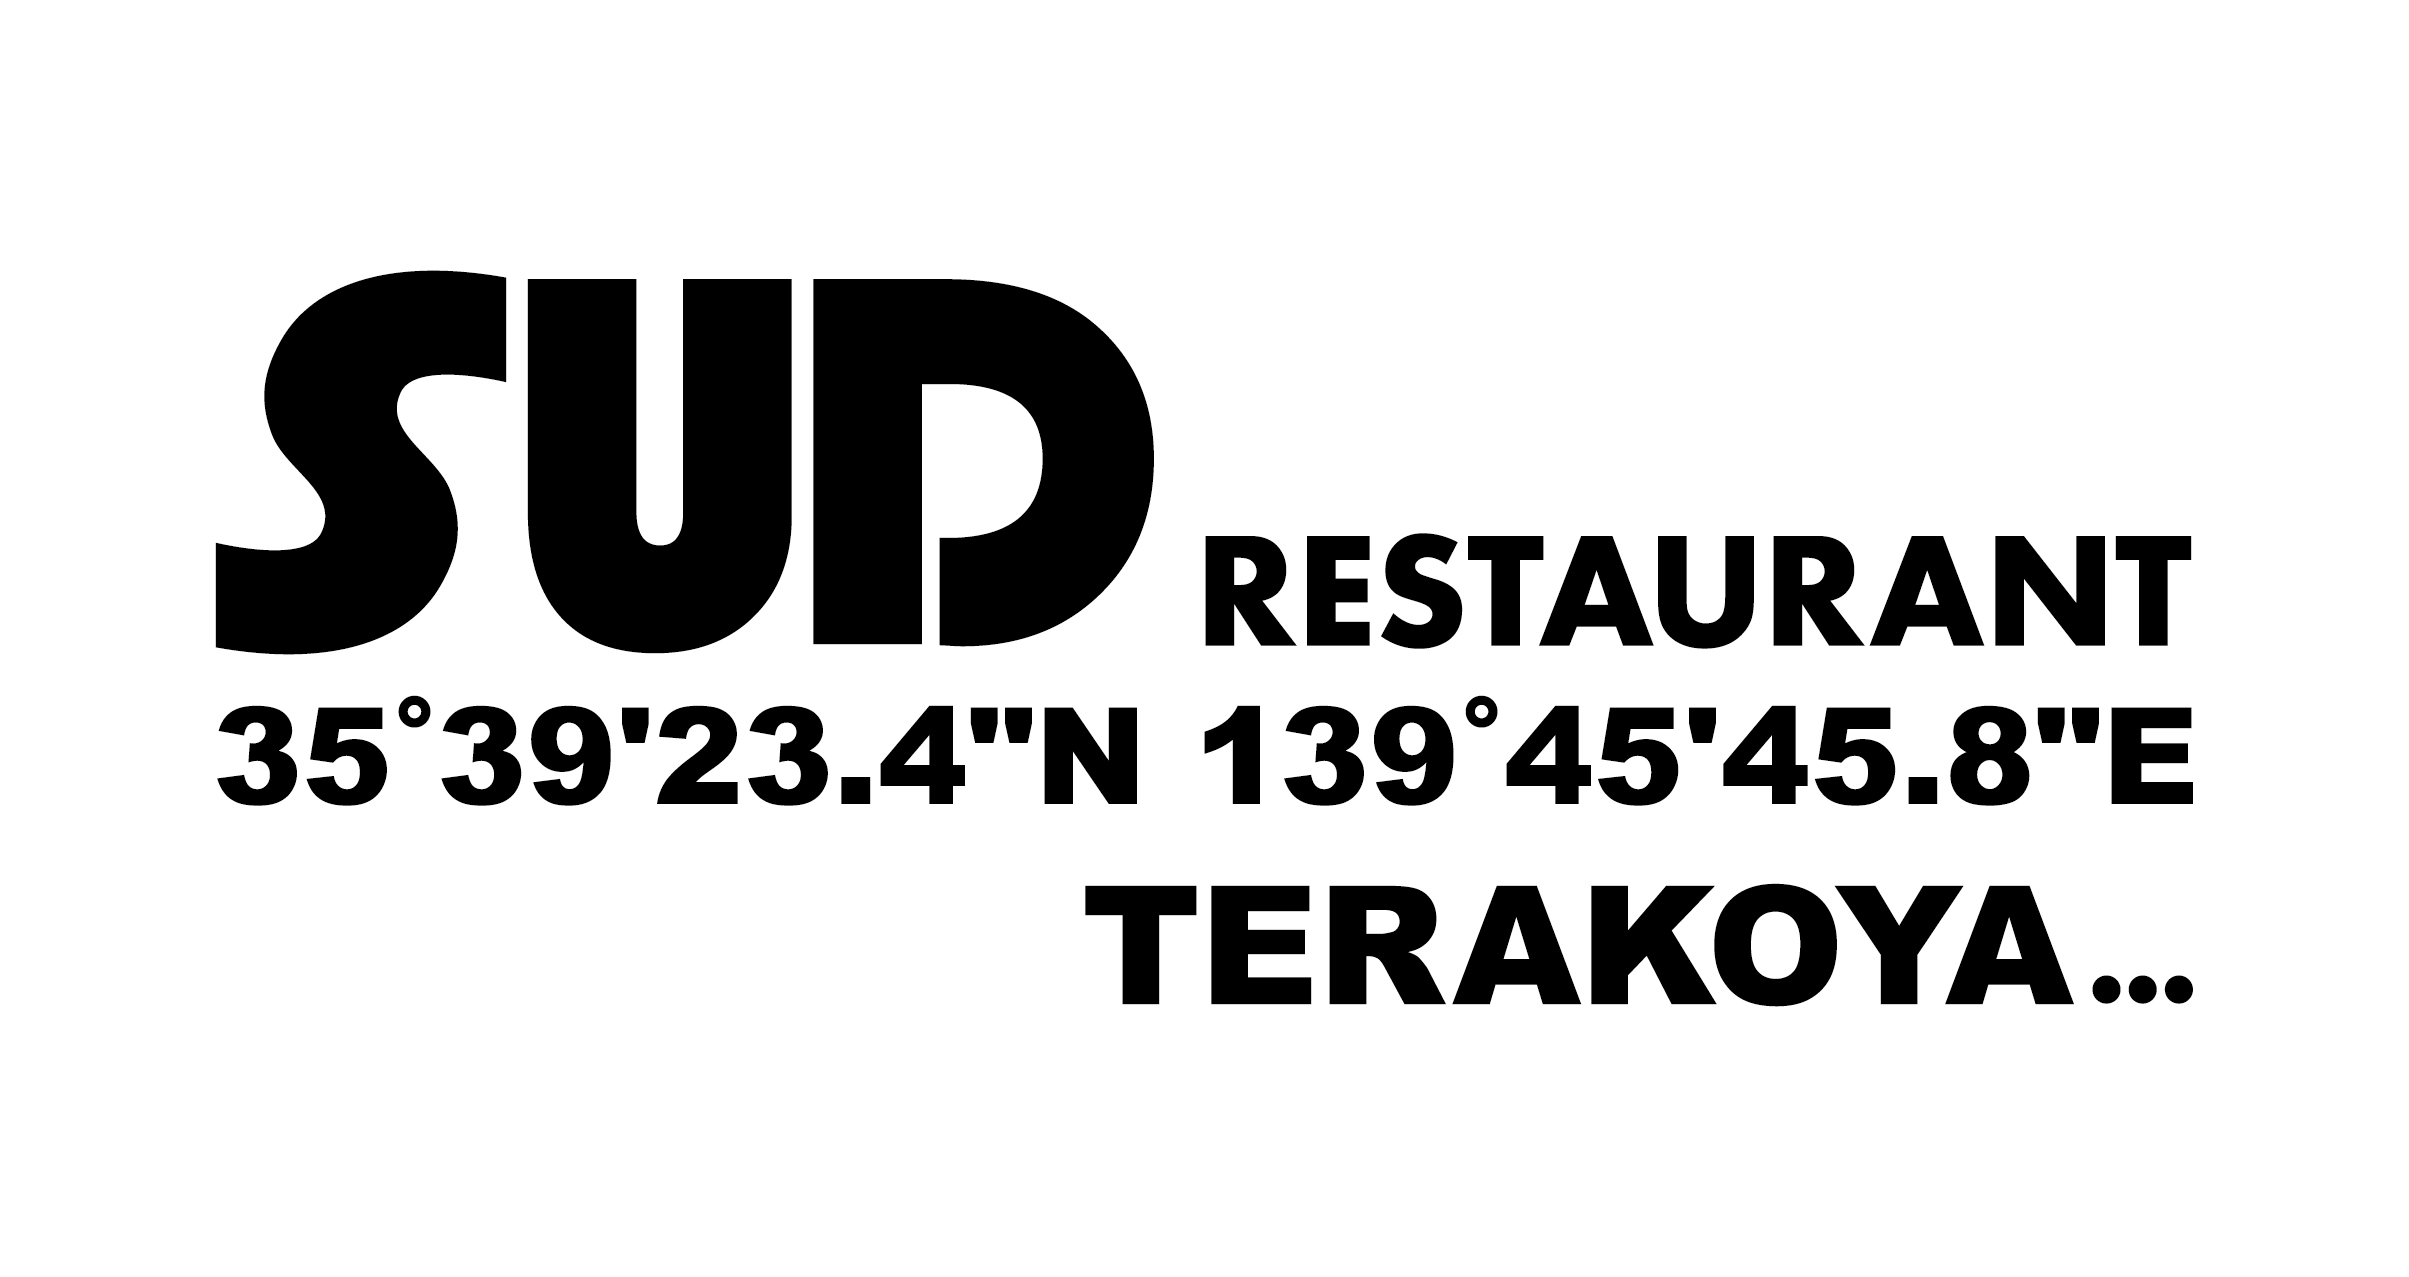 SUD Restaurant Japan Best Restaurant